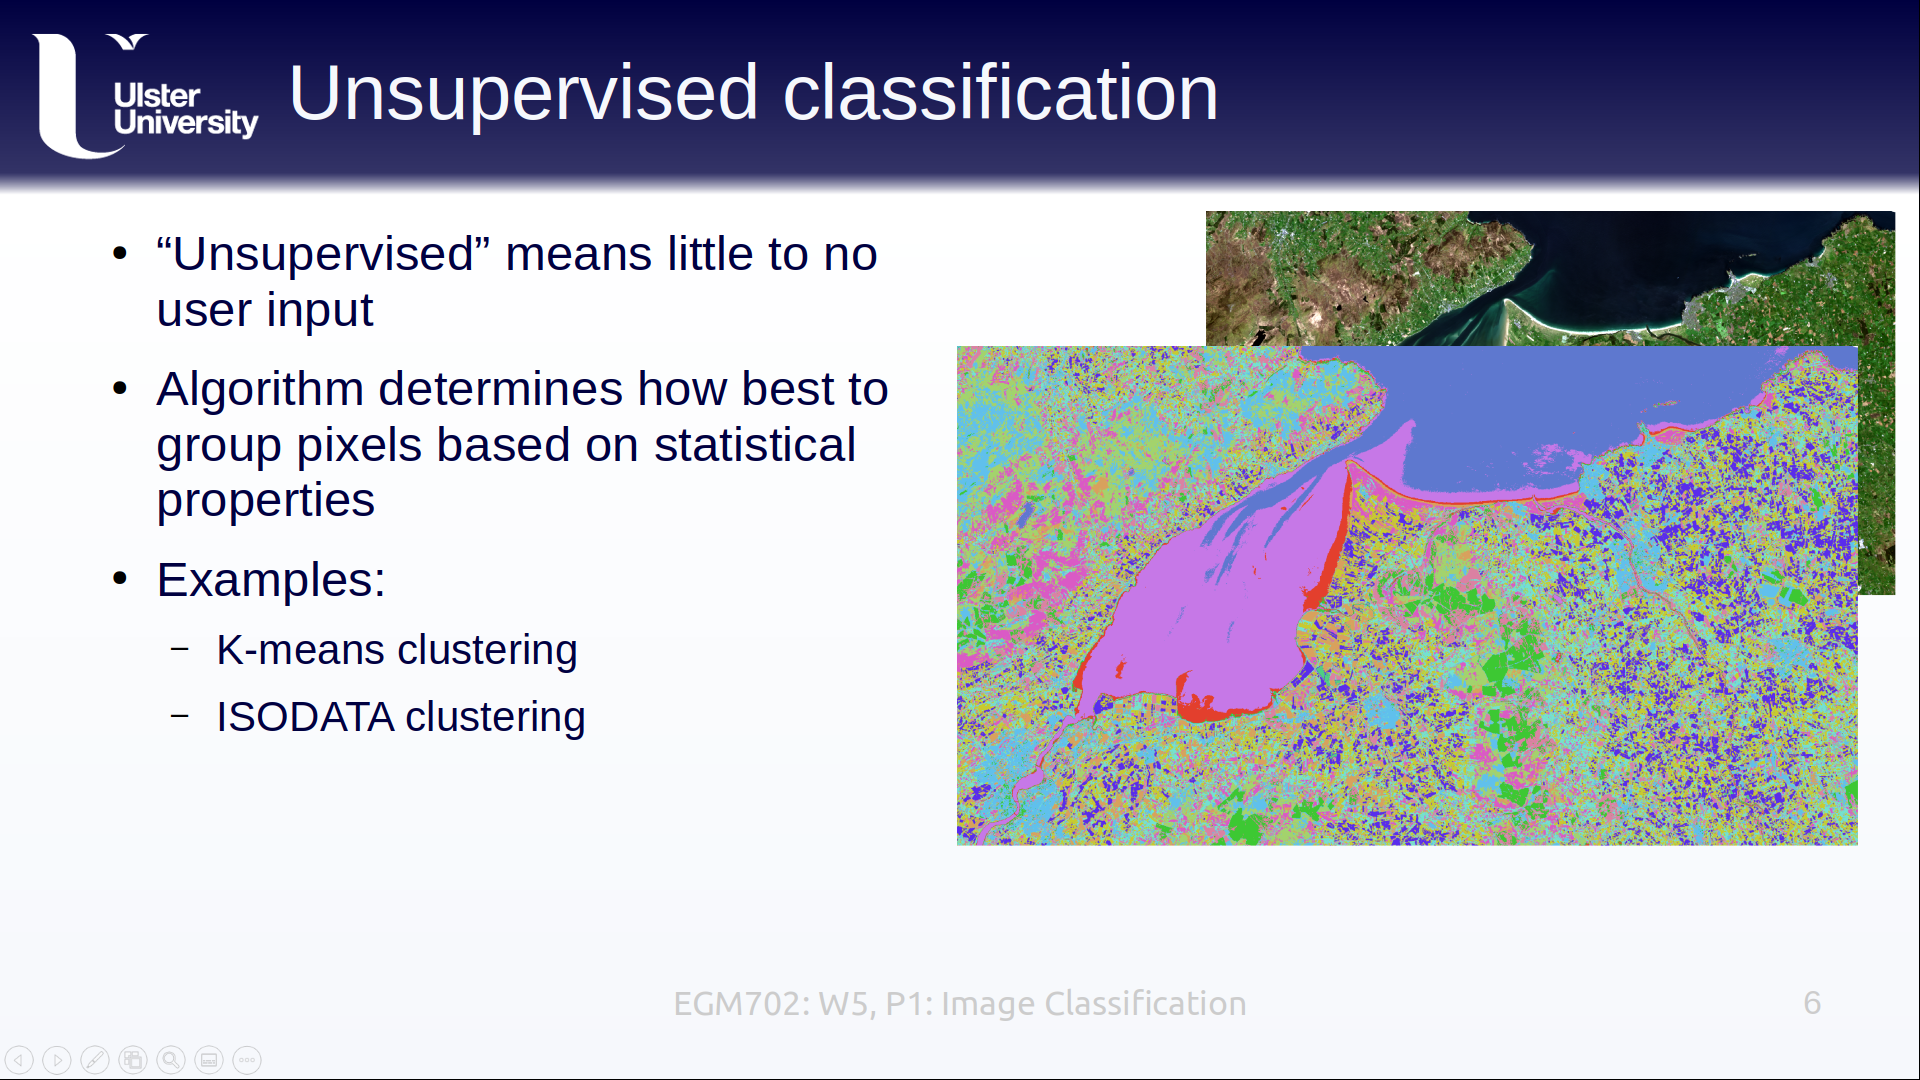 a slide explaining unsupervised classification, including different algorithms